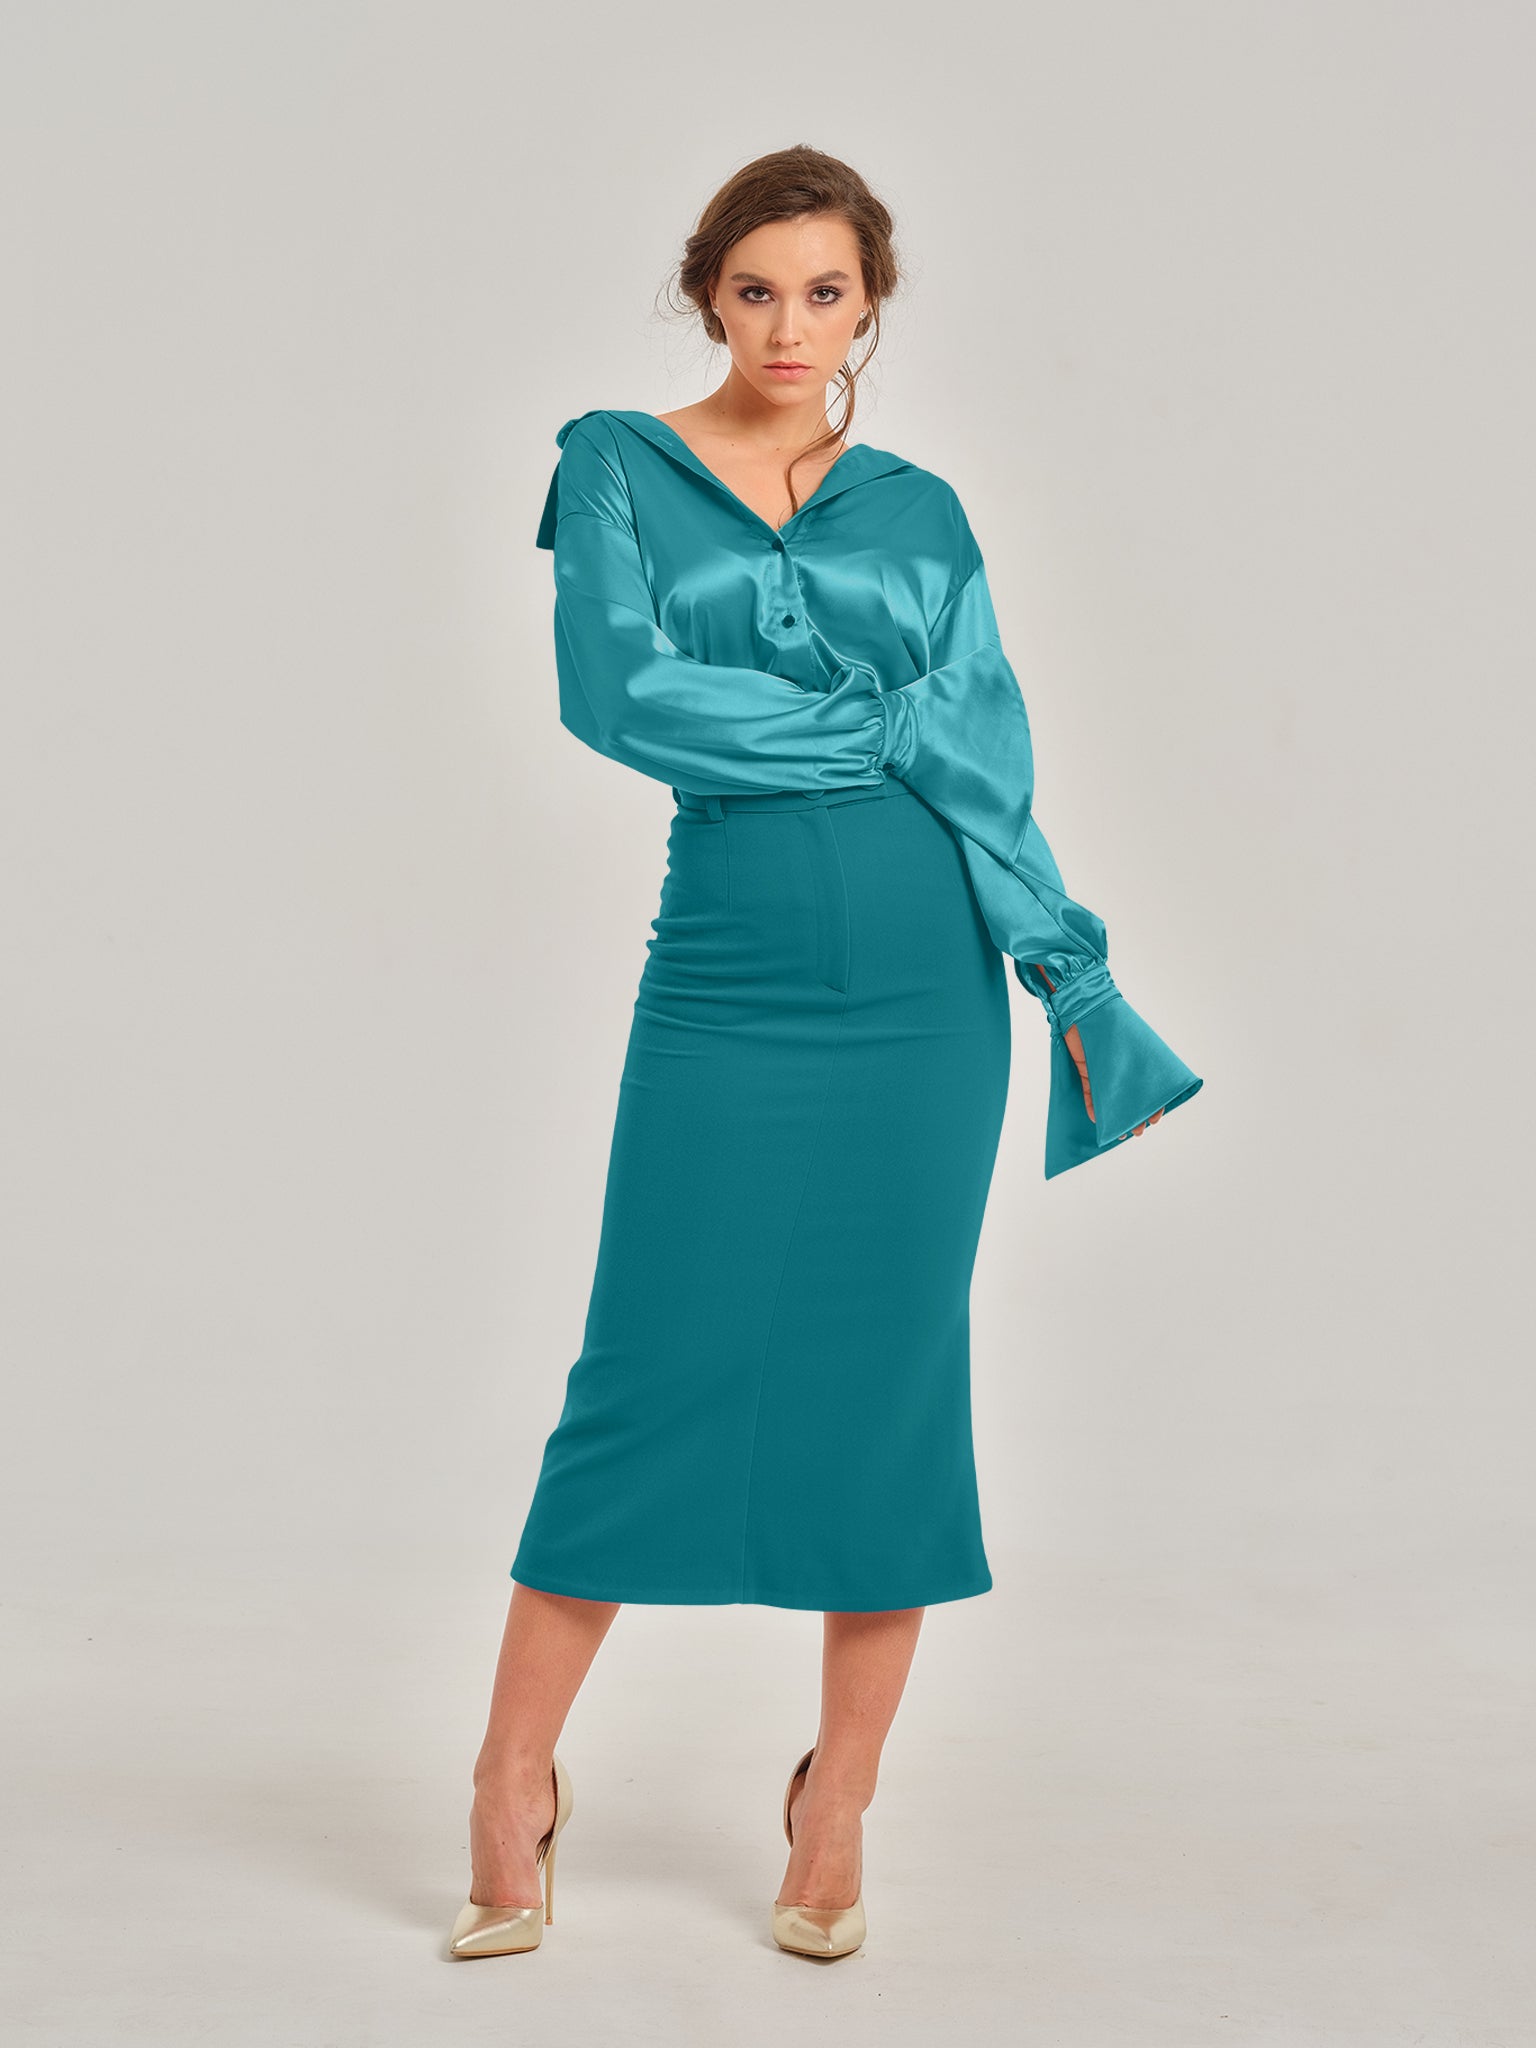 Magic Hour Trumpet Midi Skirt by Tia Dorraine Women's Luxury Fashion Designer Clothing Brand